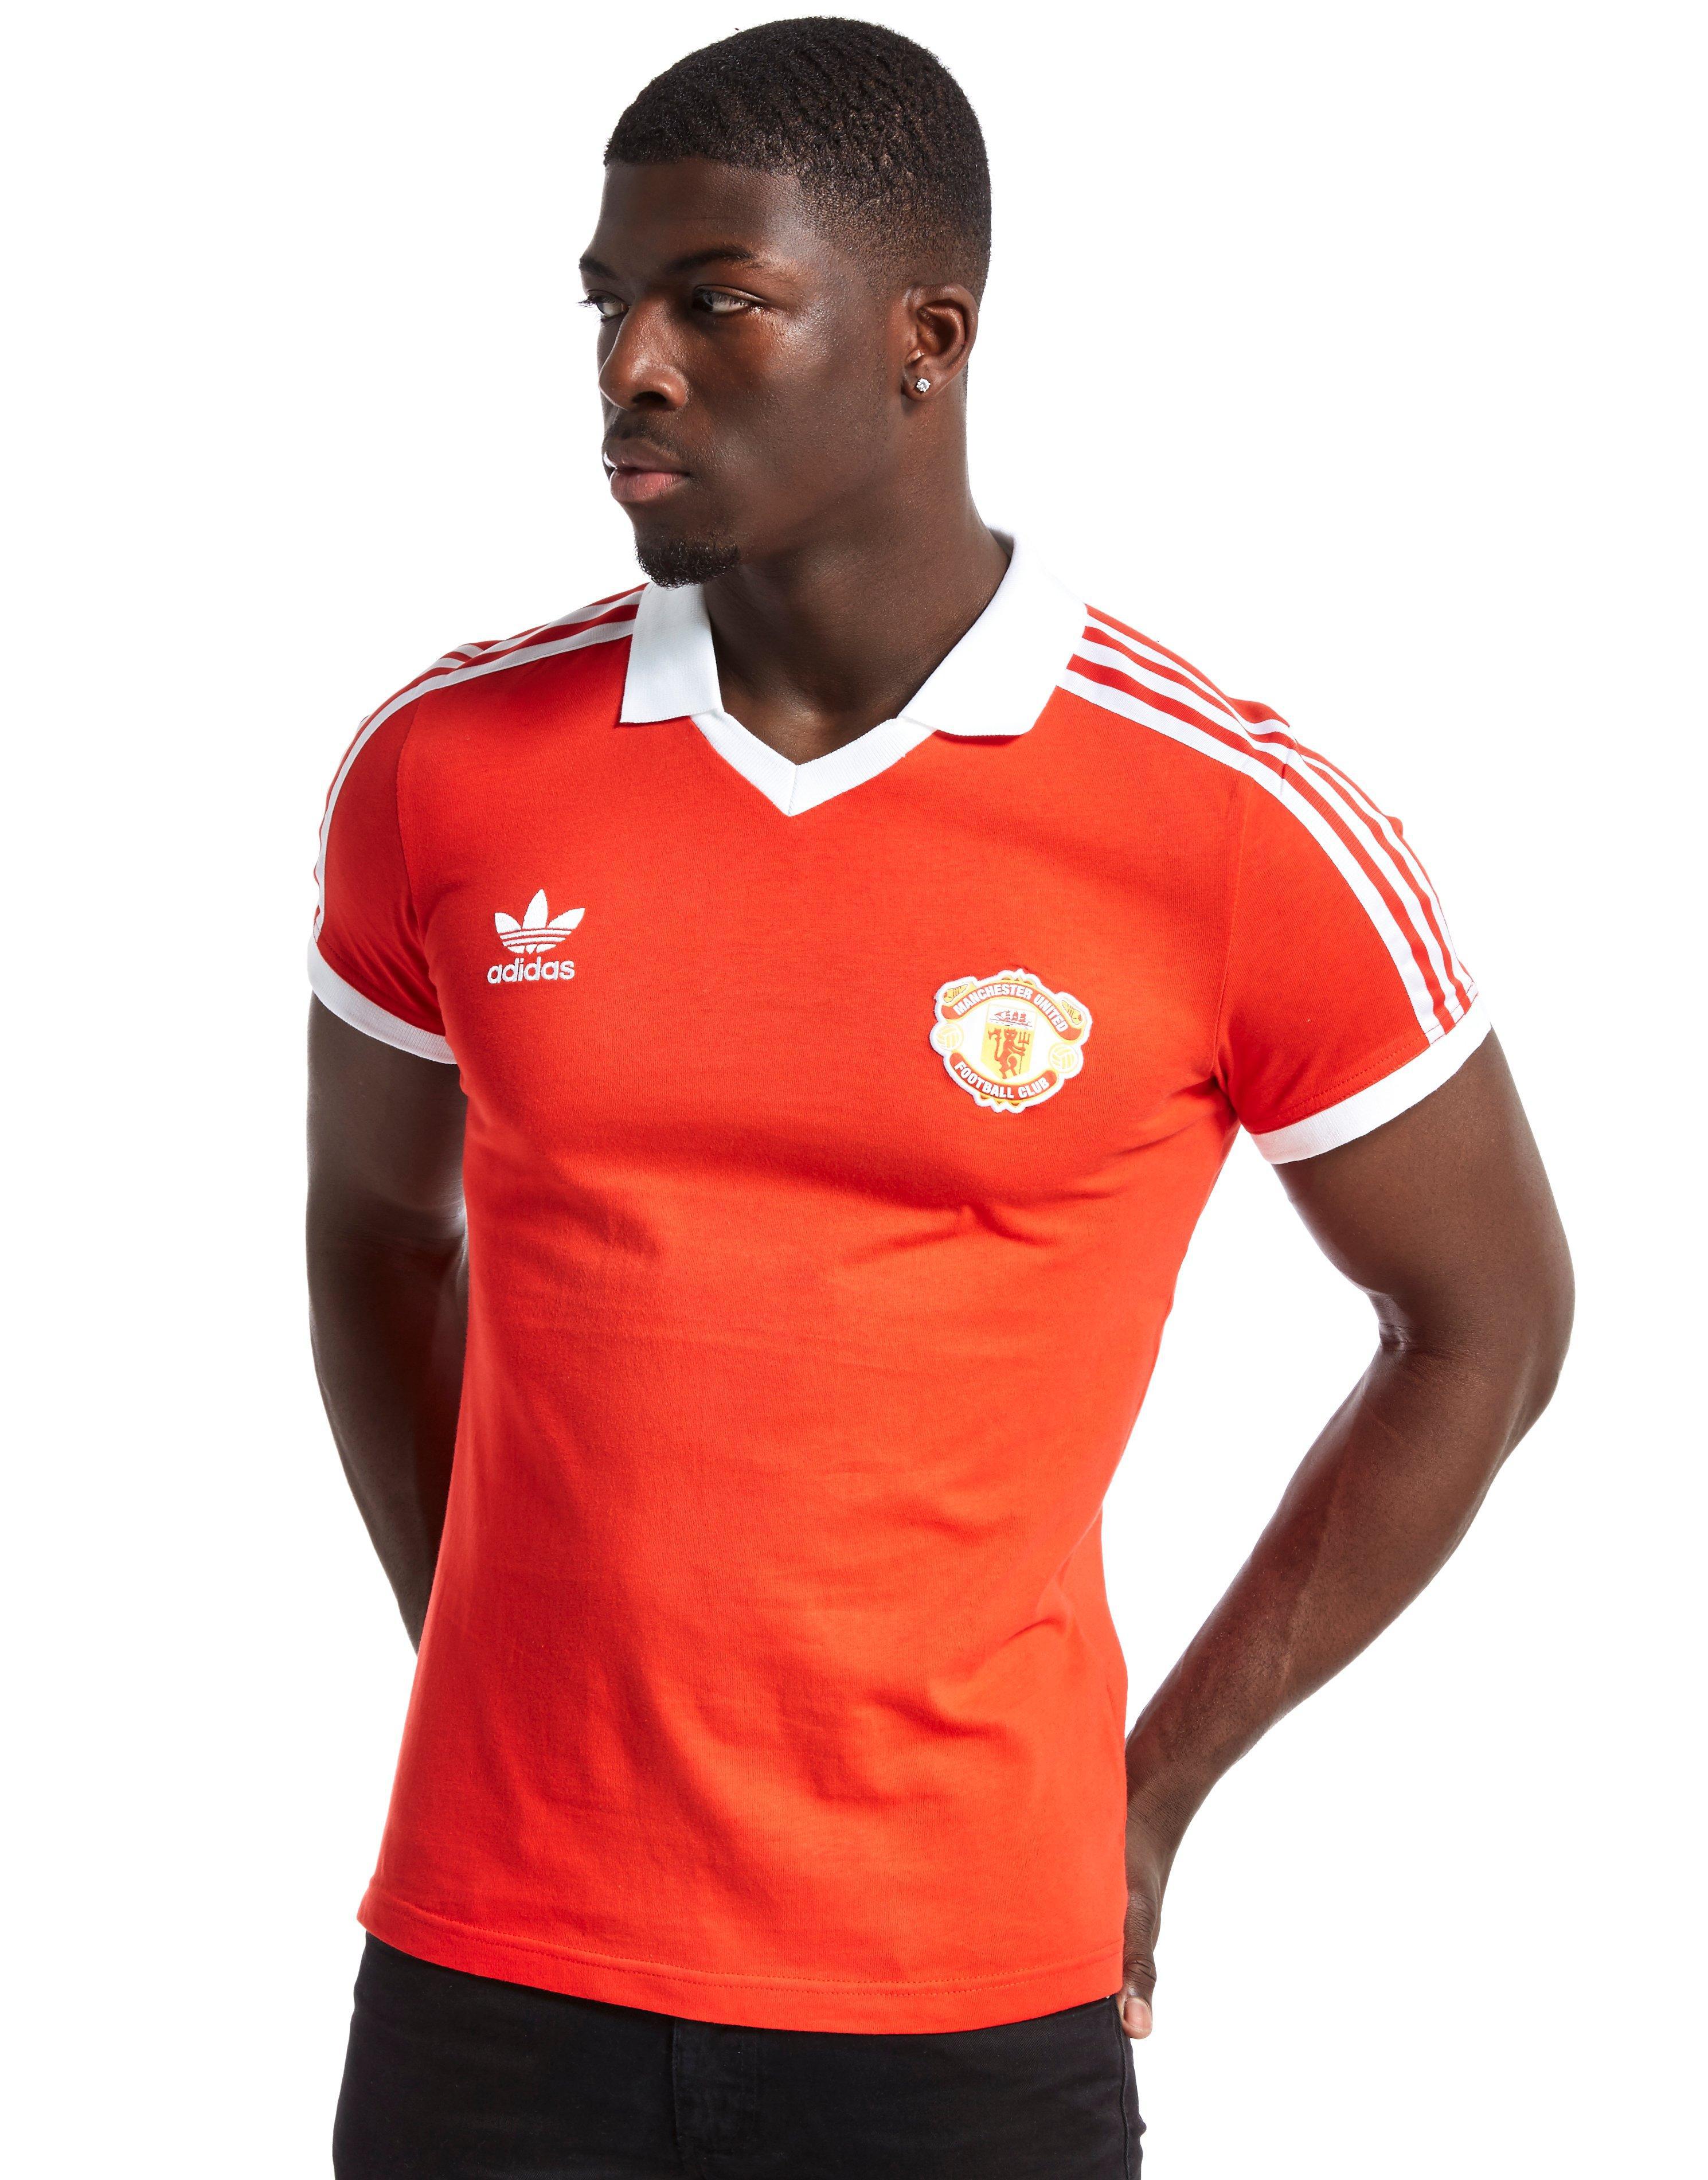 Adidas Originals Manchester United Fc Retro Jersey - Jersey Terlengkap